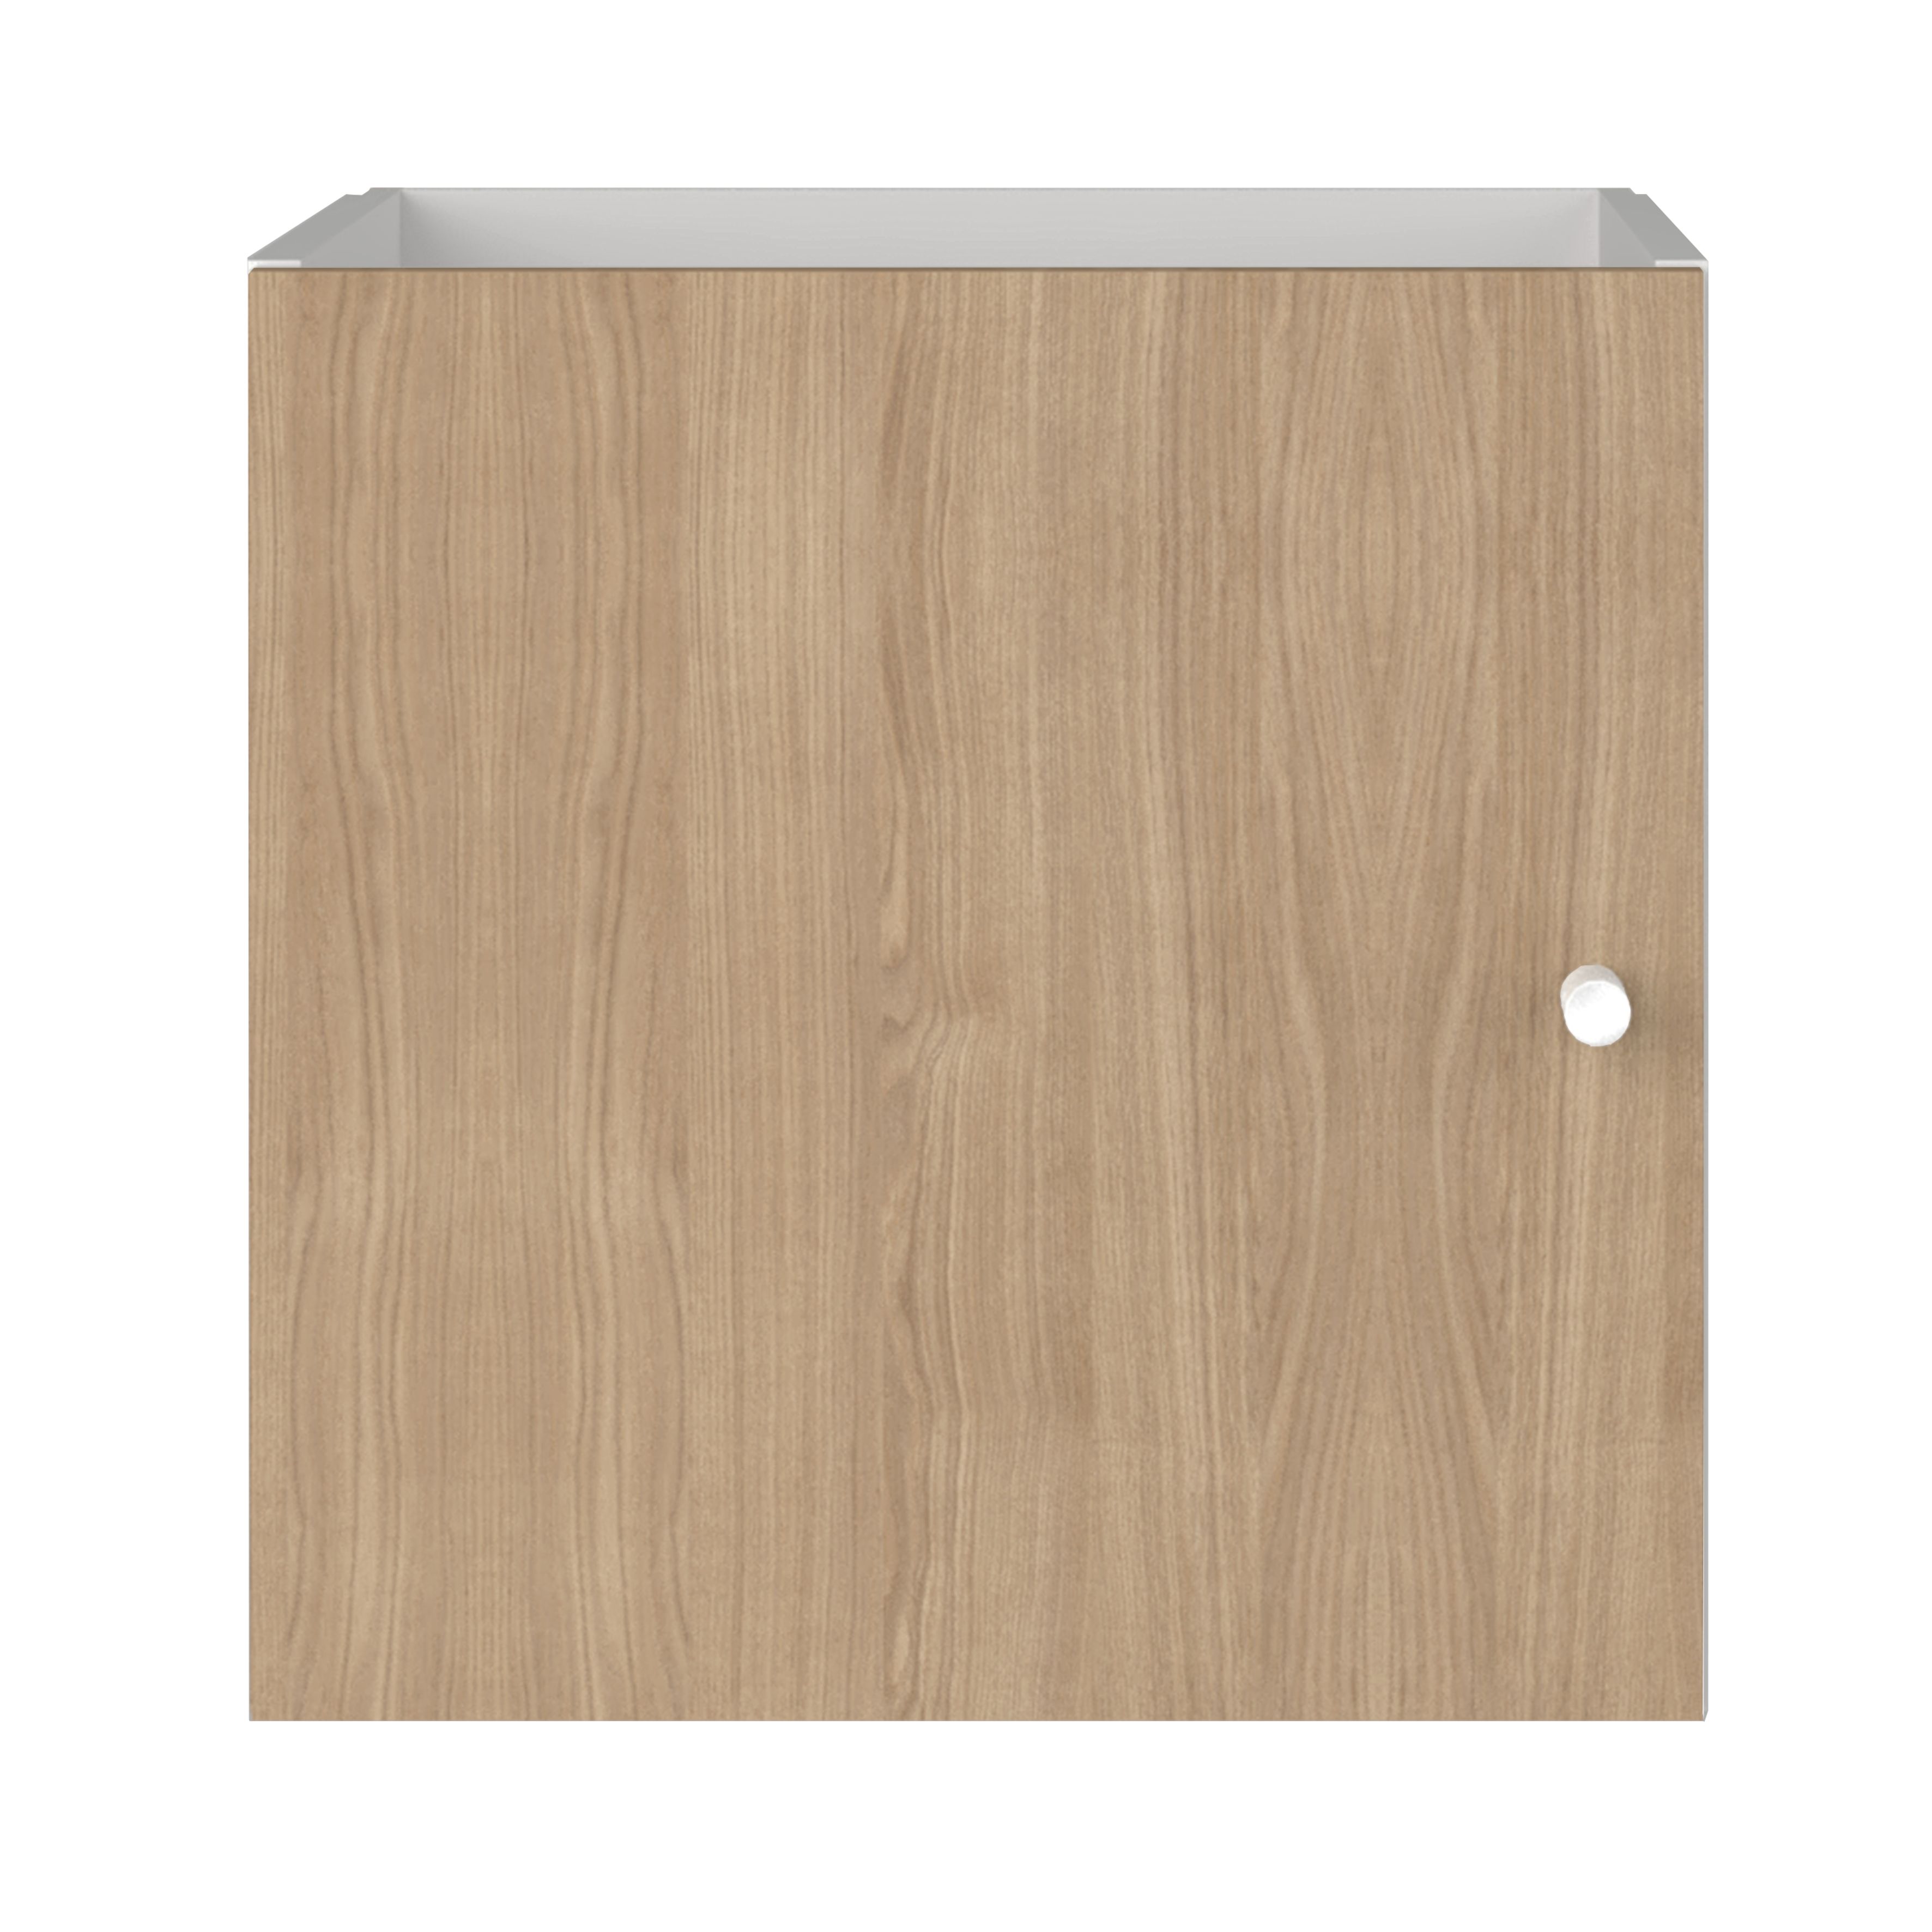 GoodHome Mixxit Oak effect Modular Cabinet door (H)329mm (W)330mm